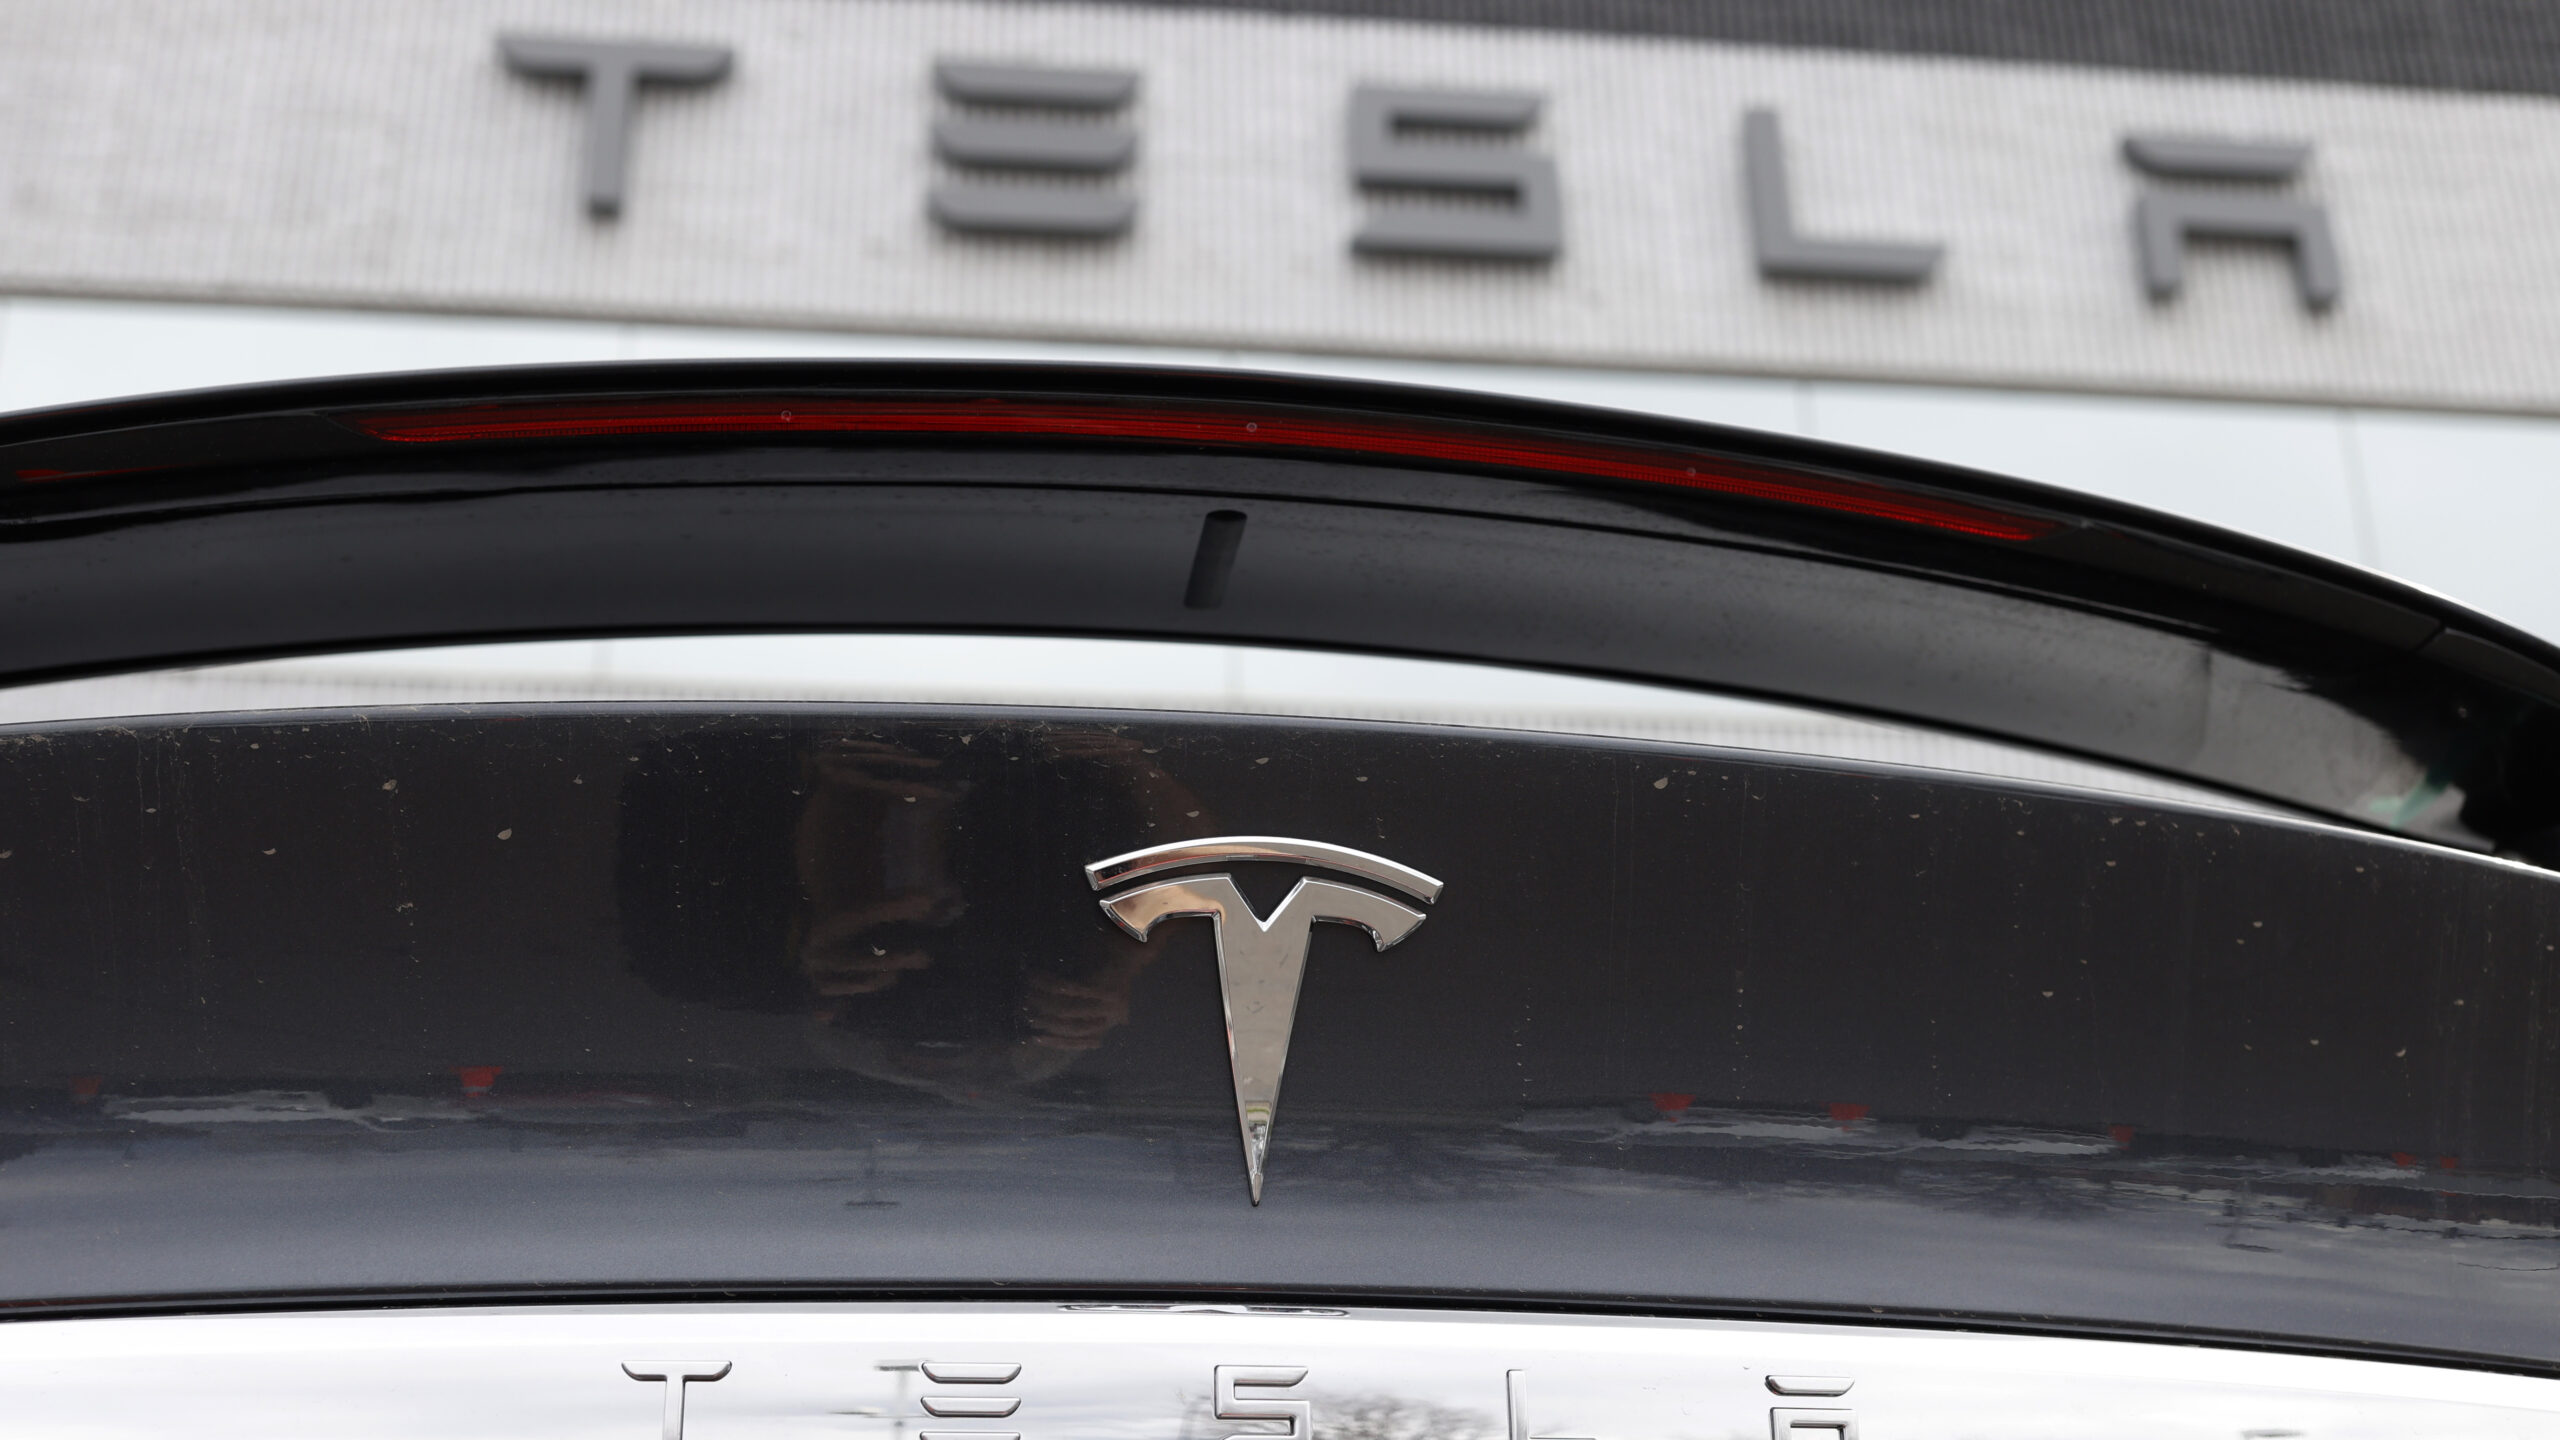 Tesla recalls over 2 million vehicles to fix defective Autopilot monitoring system